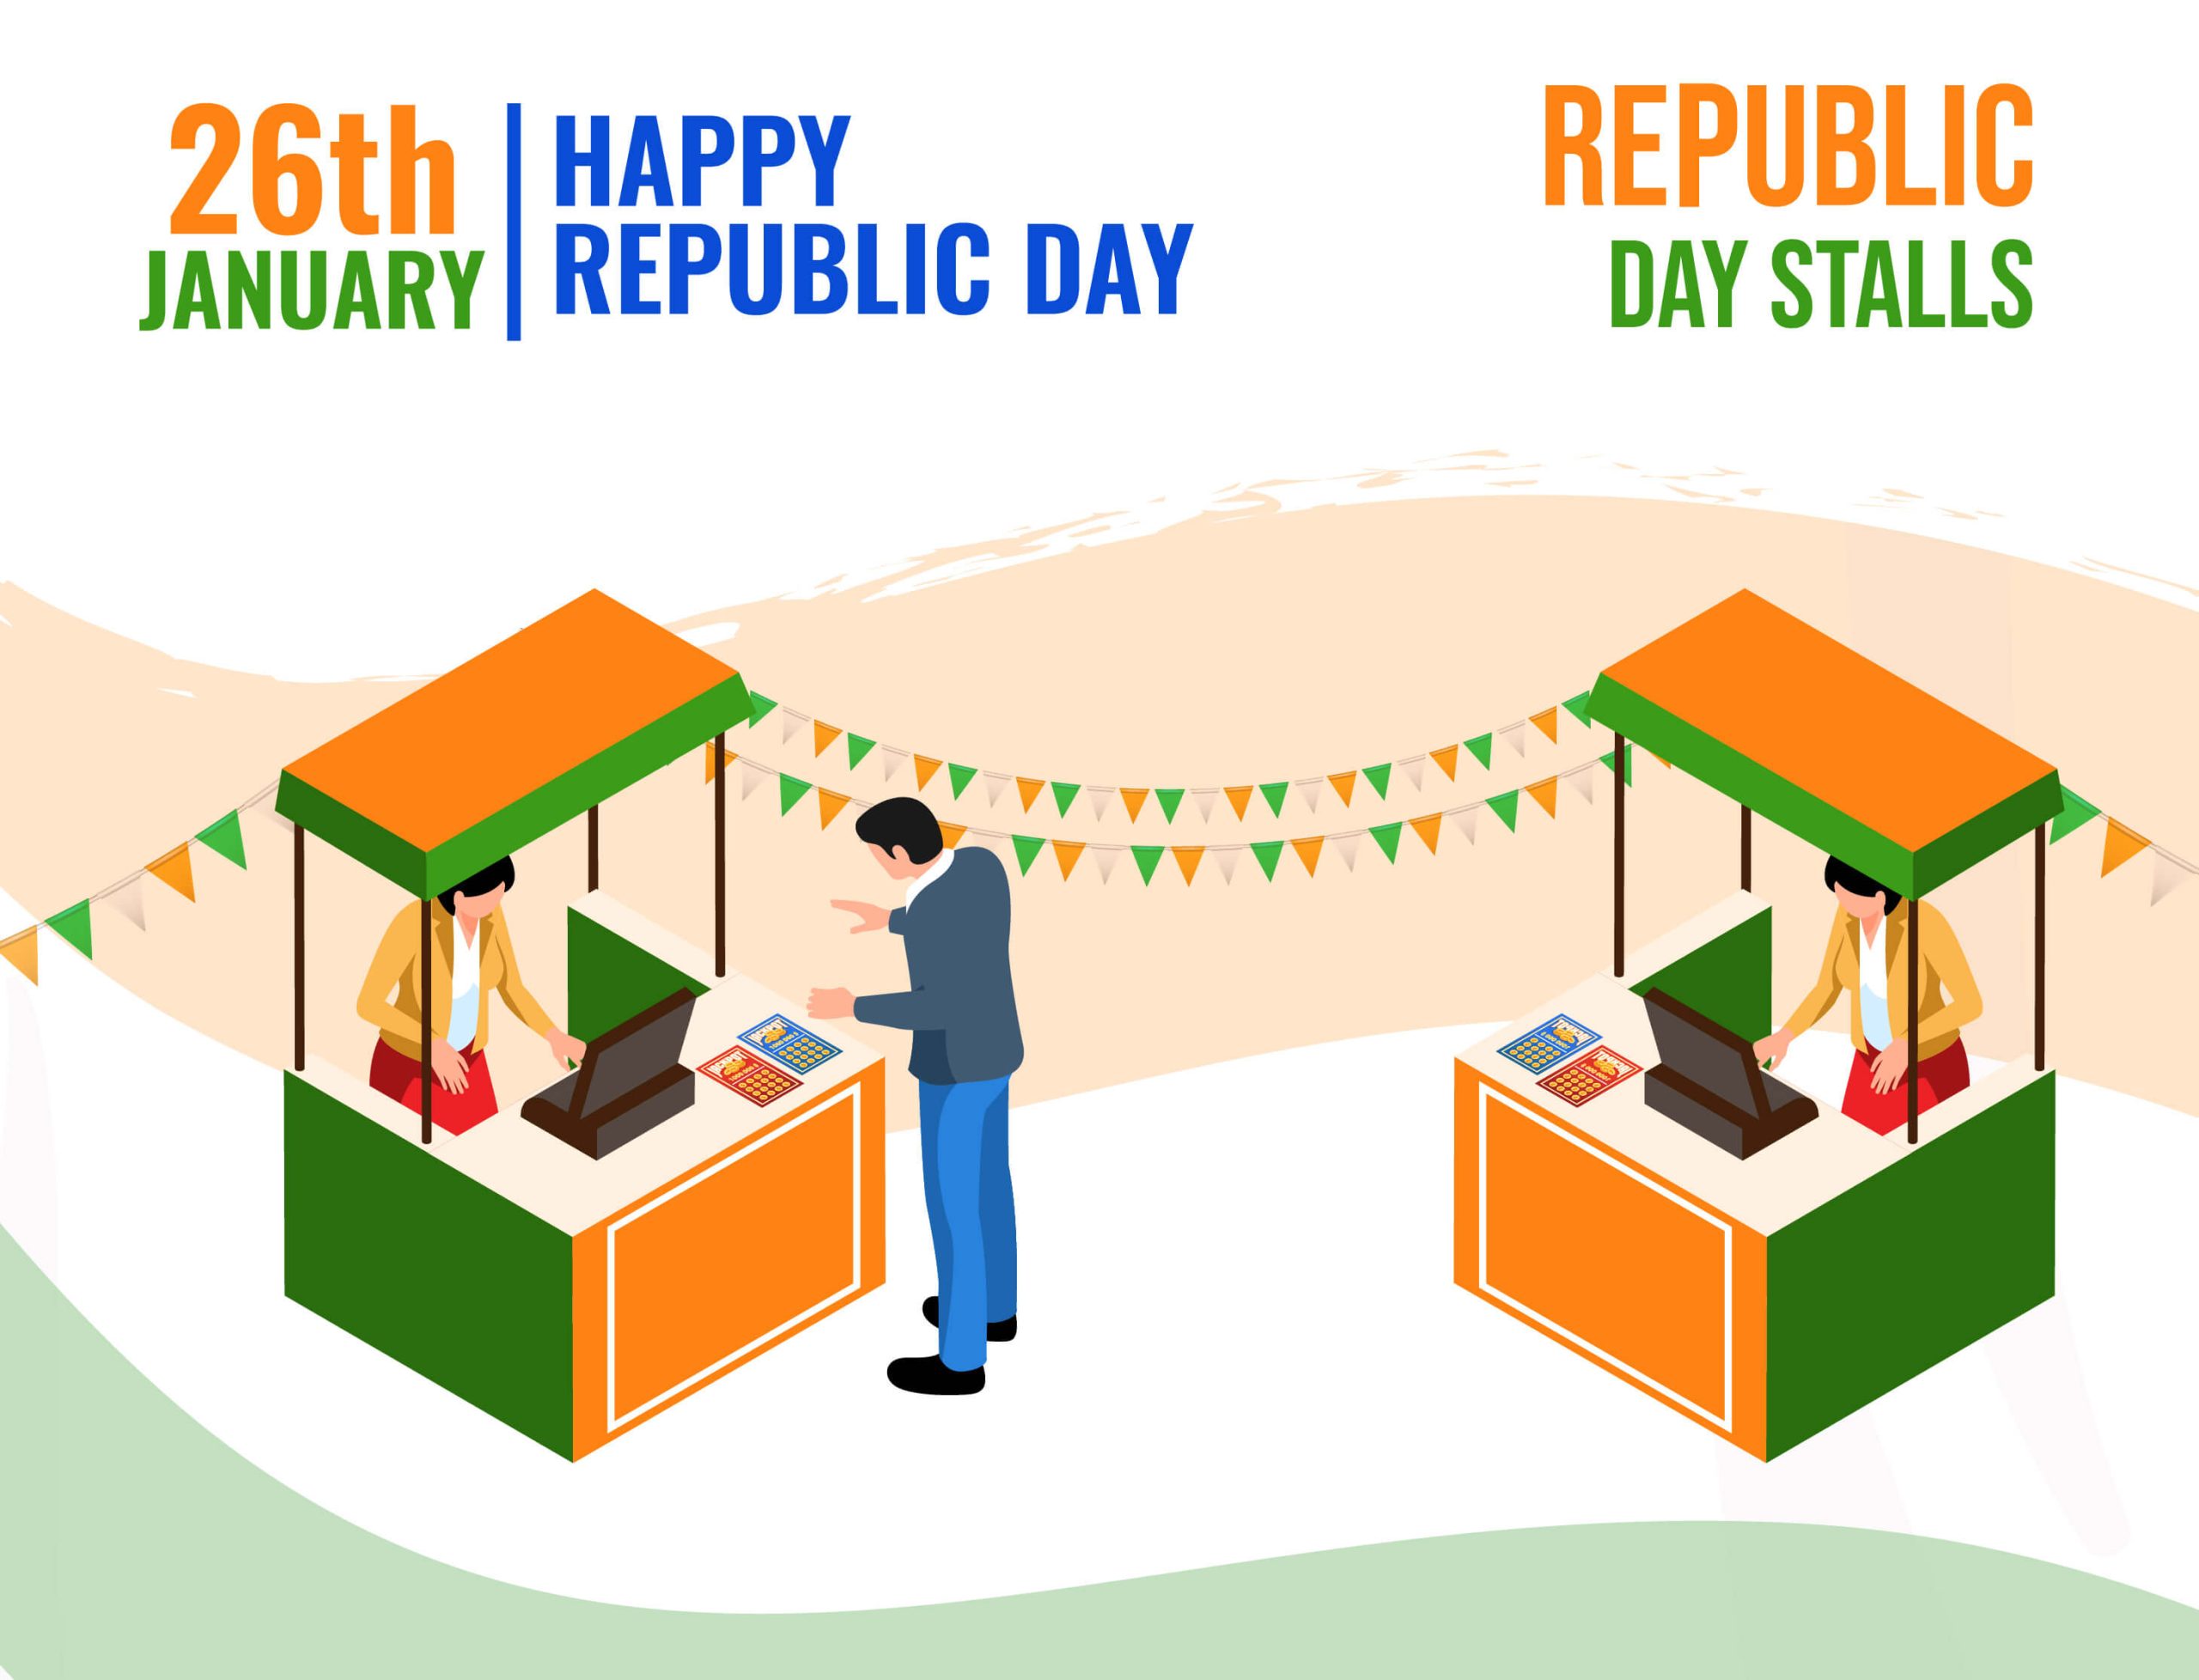 Republic Day stalls